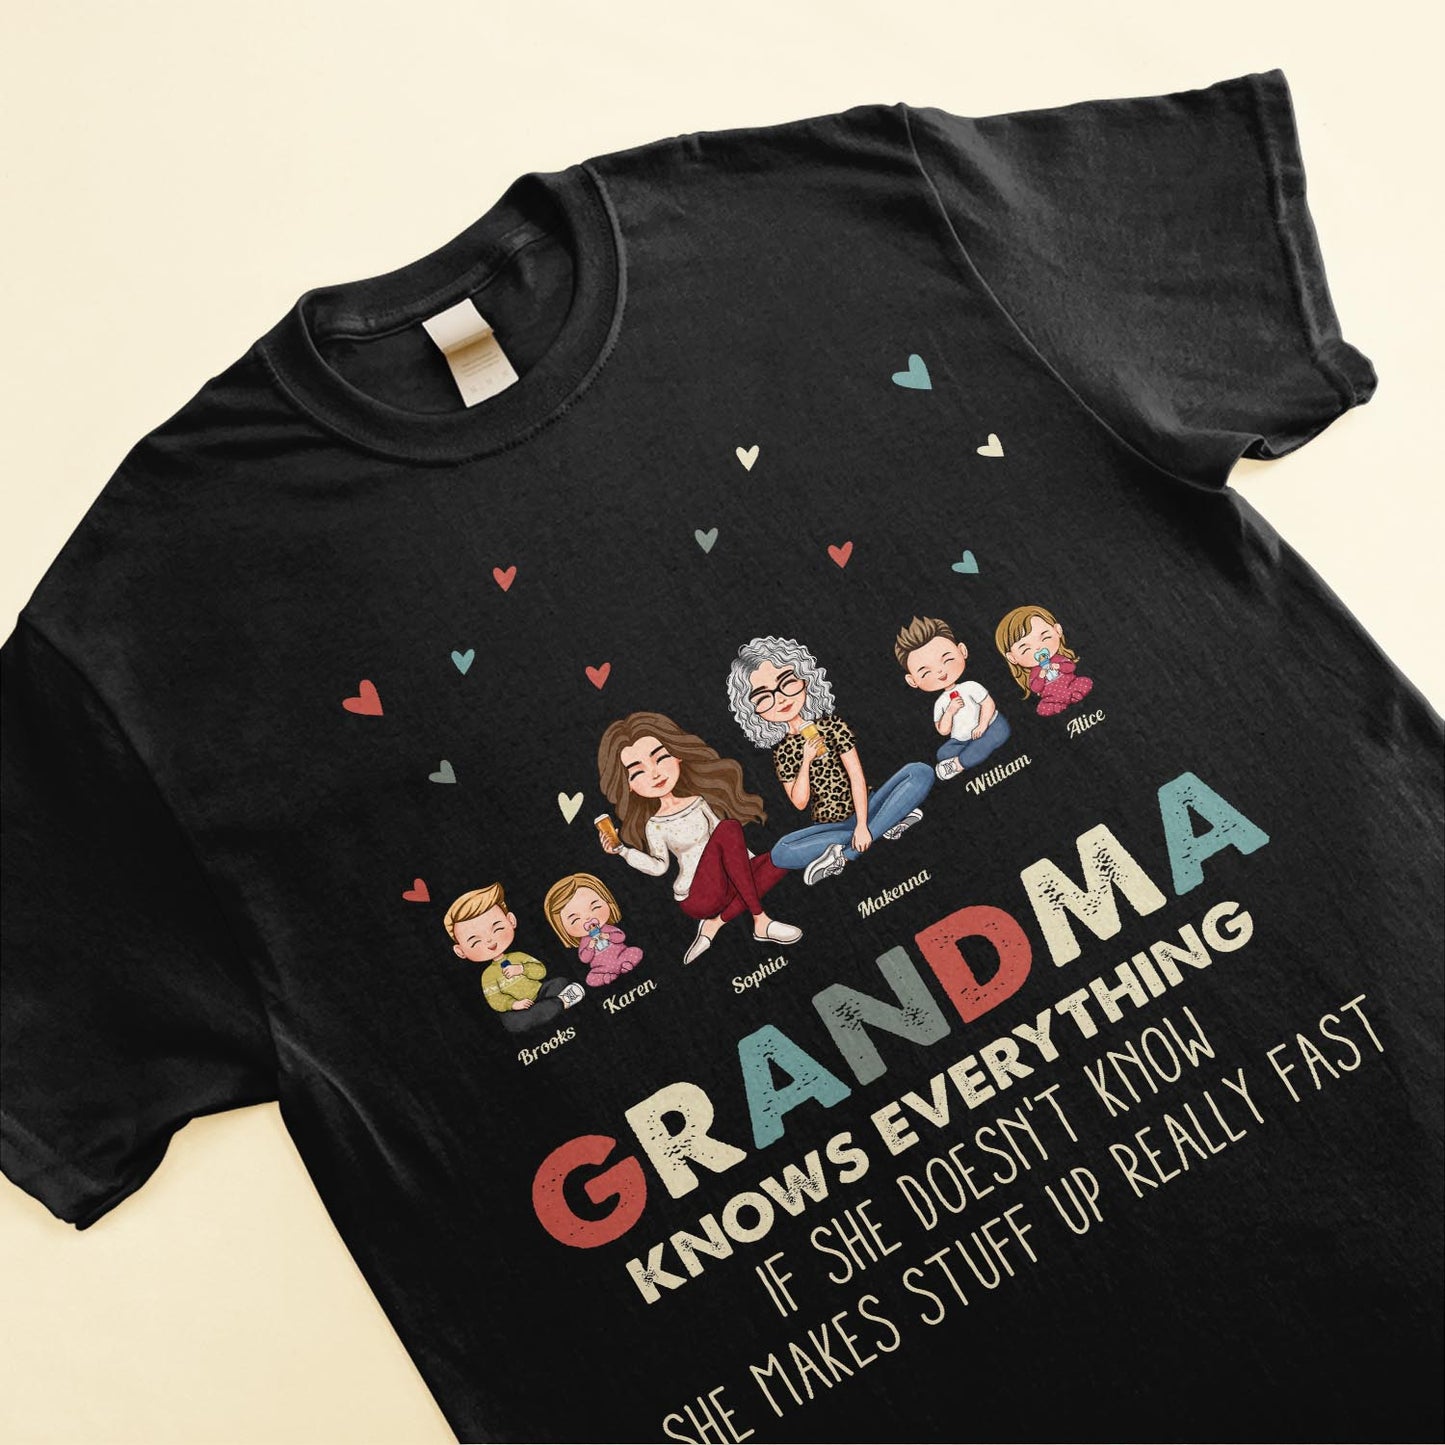 Grandparent Know Everything - Personalized Shirt - Birthday, Loving Gift For Grandma, Grandpa